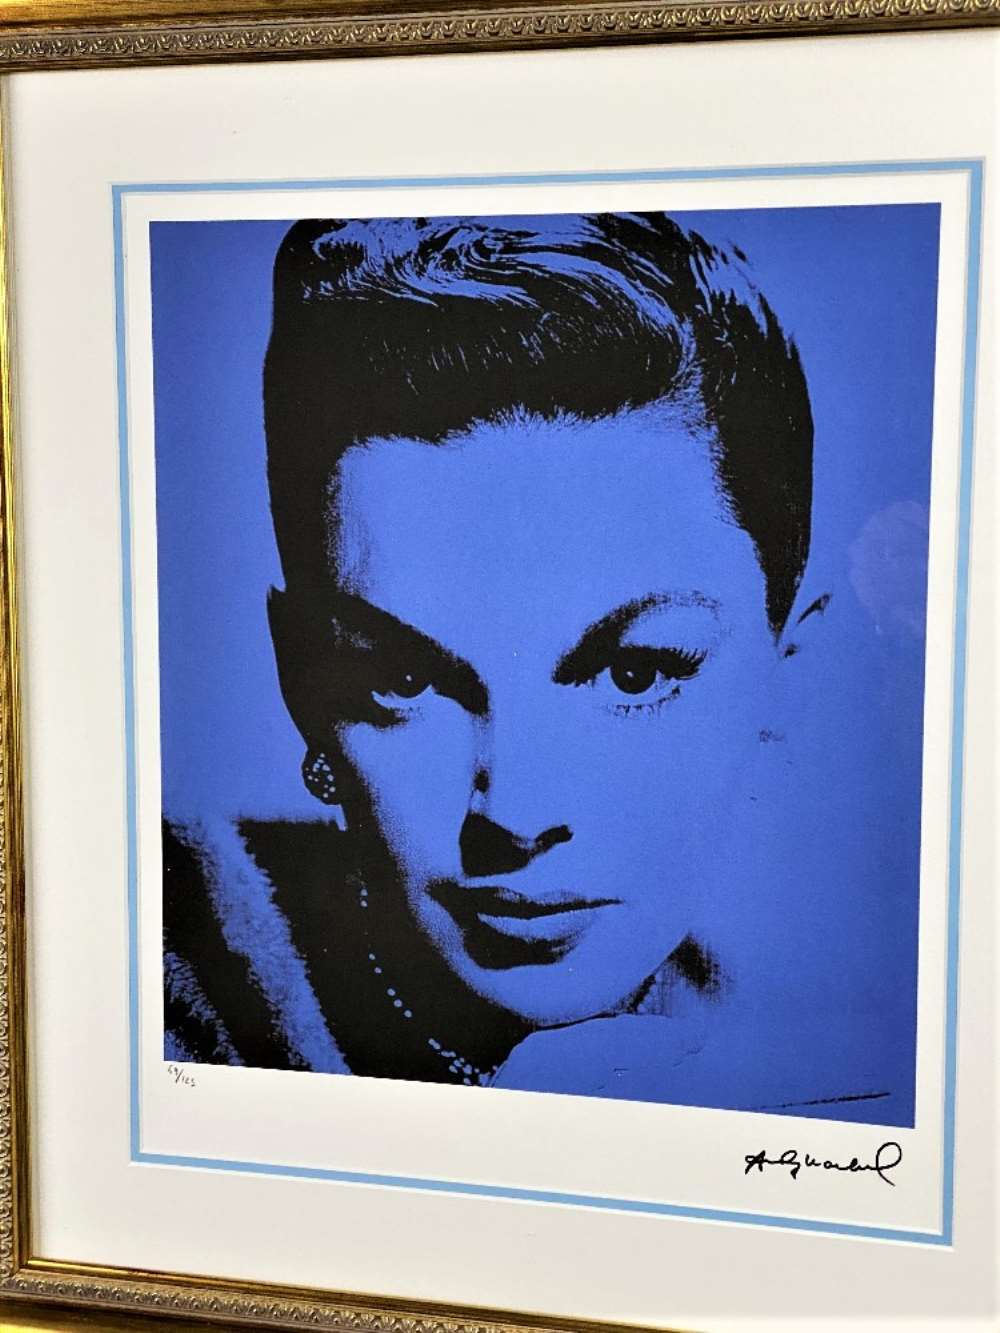 Andy Warhol (1928-1987) “Judy Garland” Ltd Edition Lithograph - Image 2 of 6